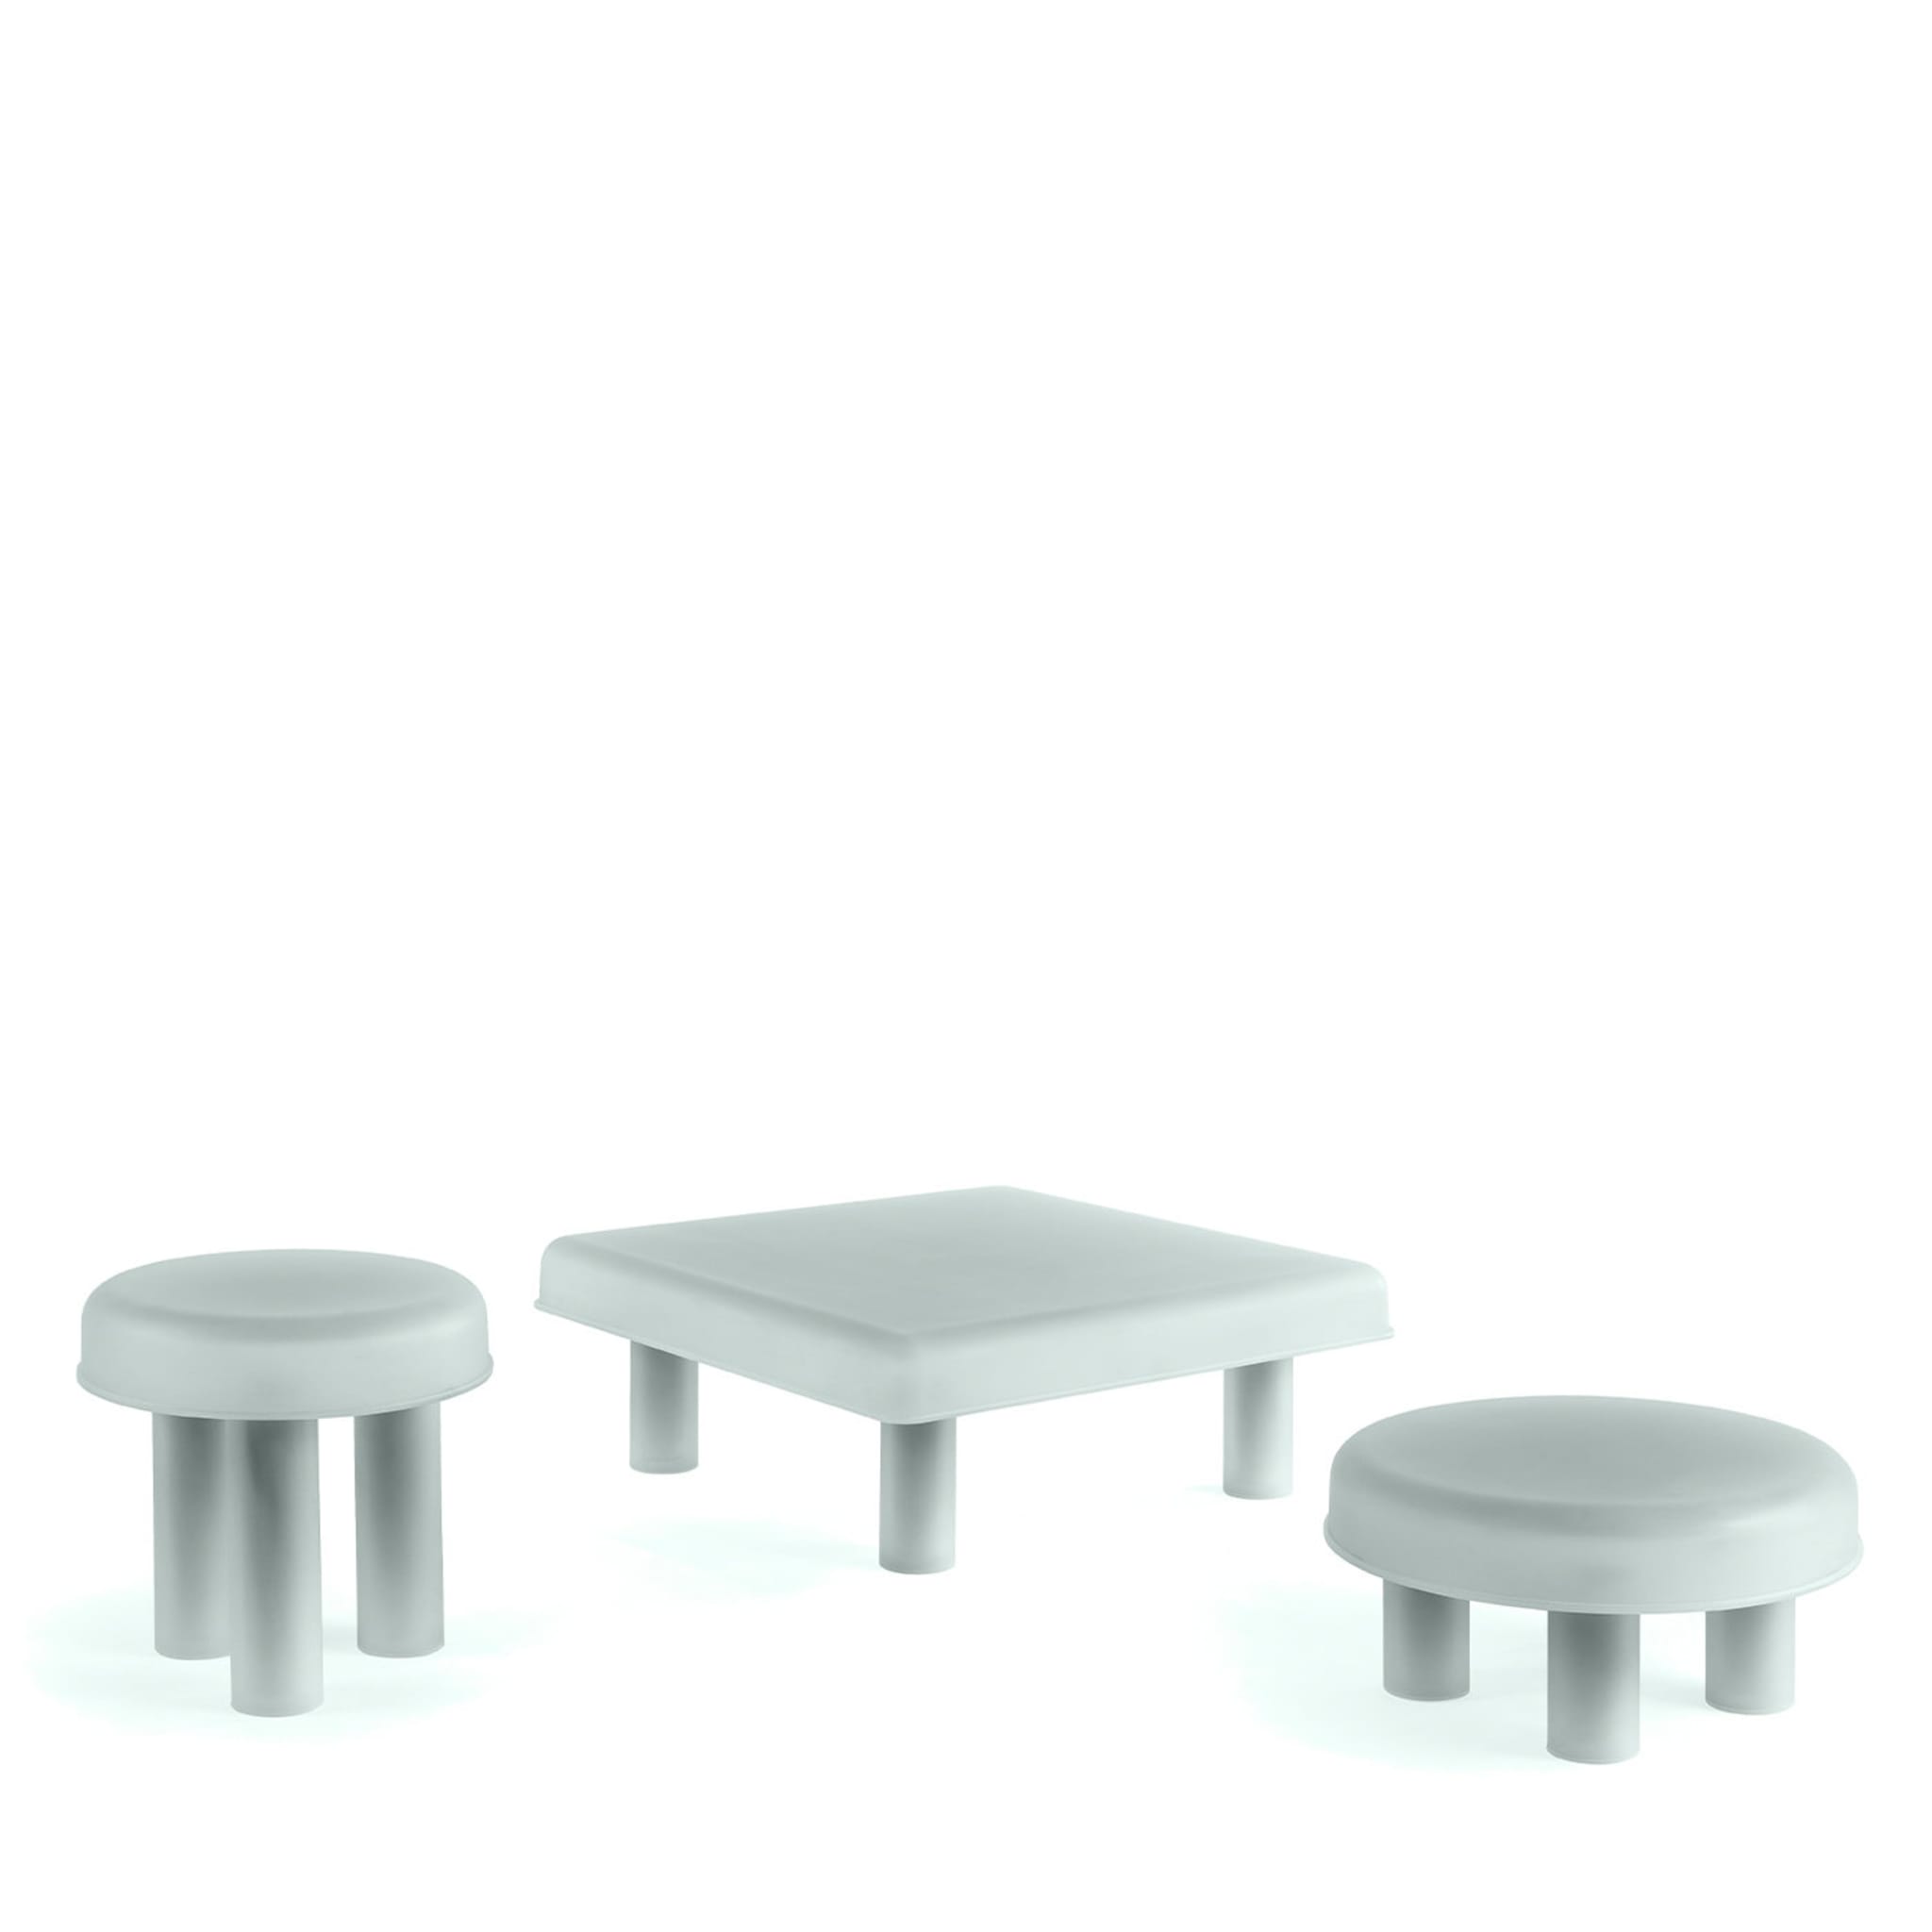 SOPOVRIA RE SIDE TABLE - Design by Sovrappensiero - Alternative view 1